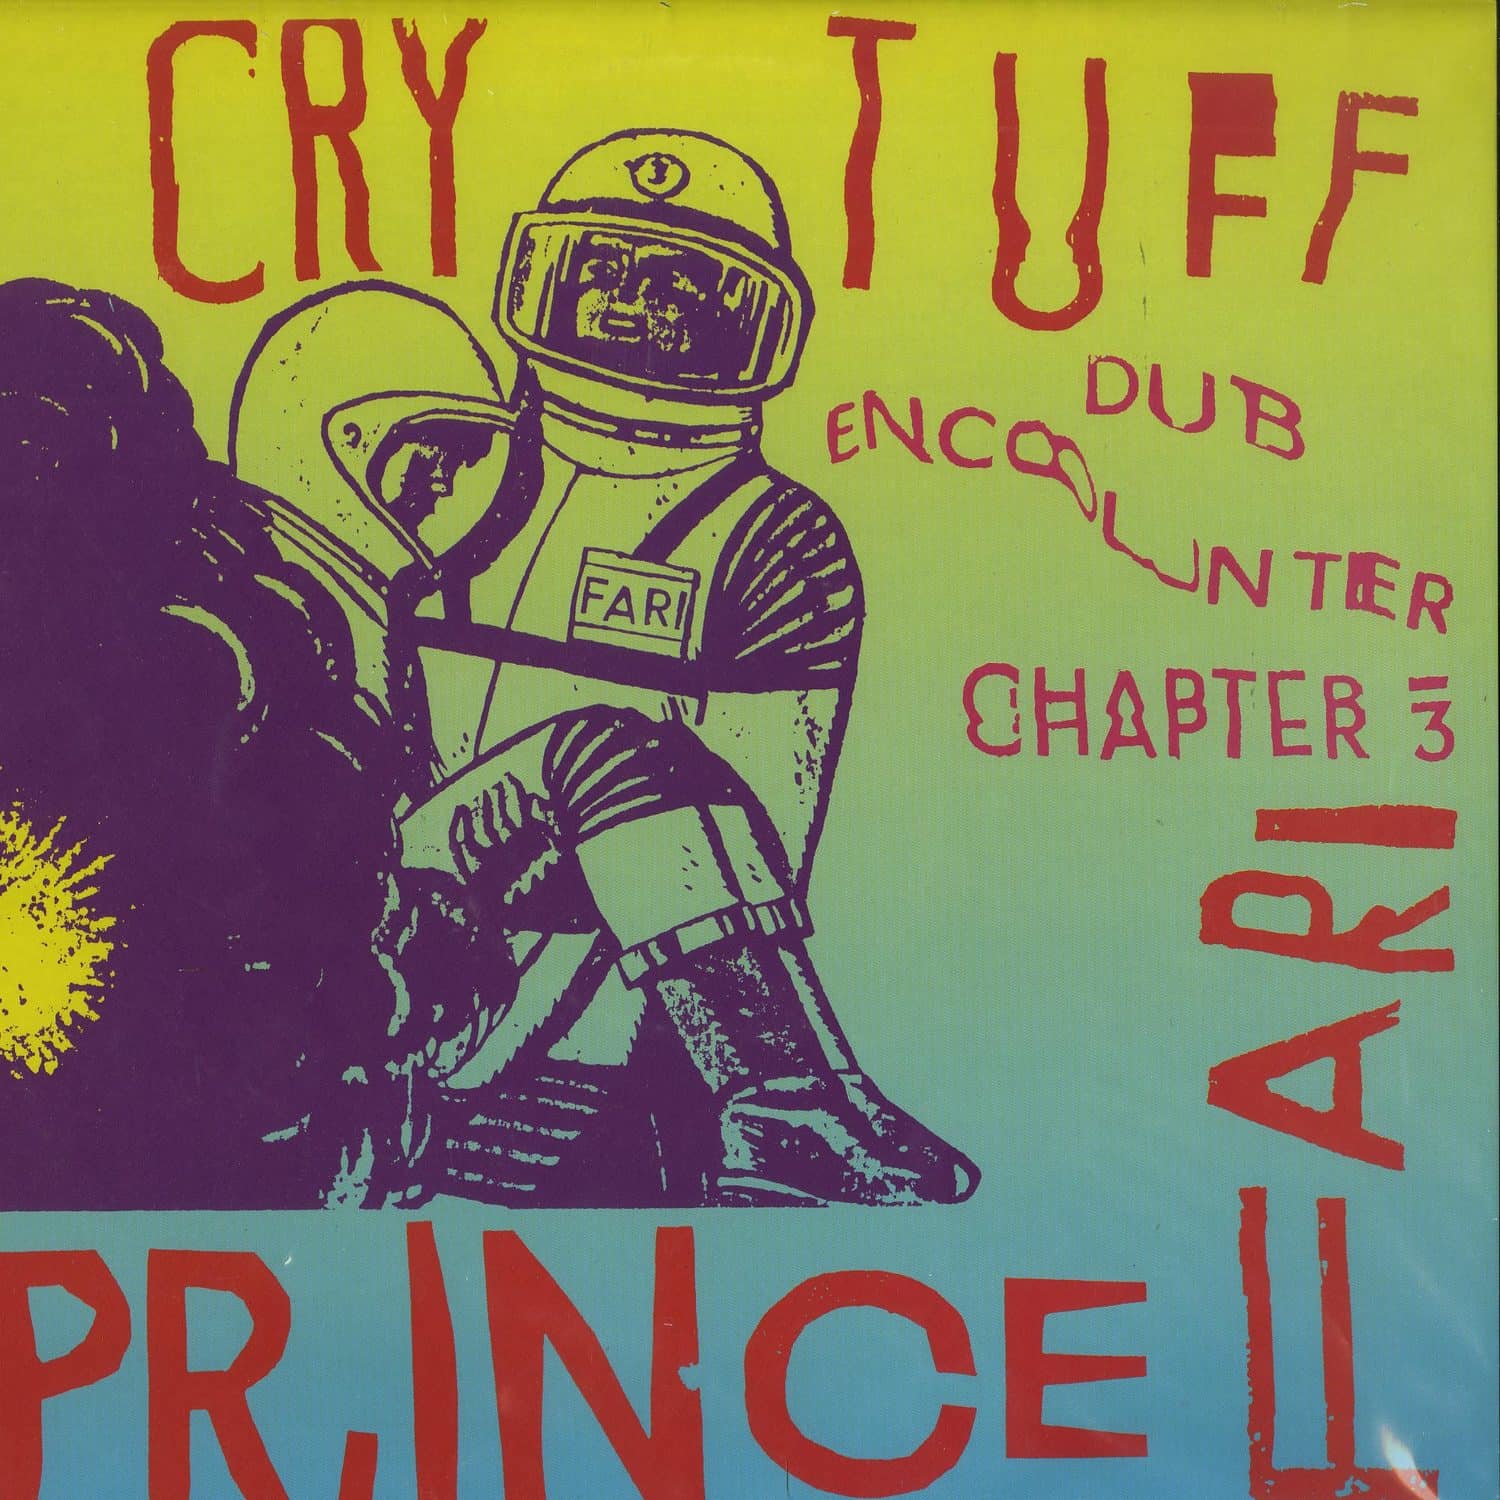 Prince Far I - CRY TUFF DUB ENCOUNTER CHAPTER 3 